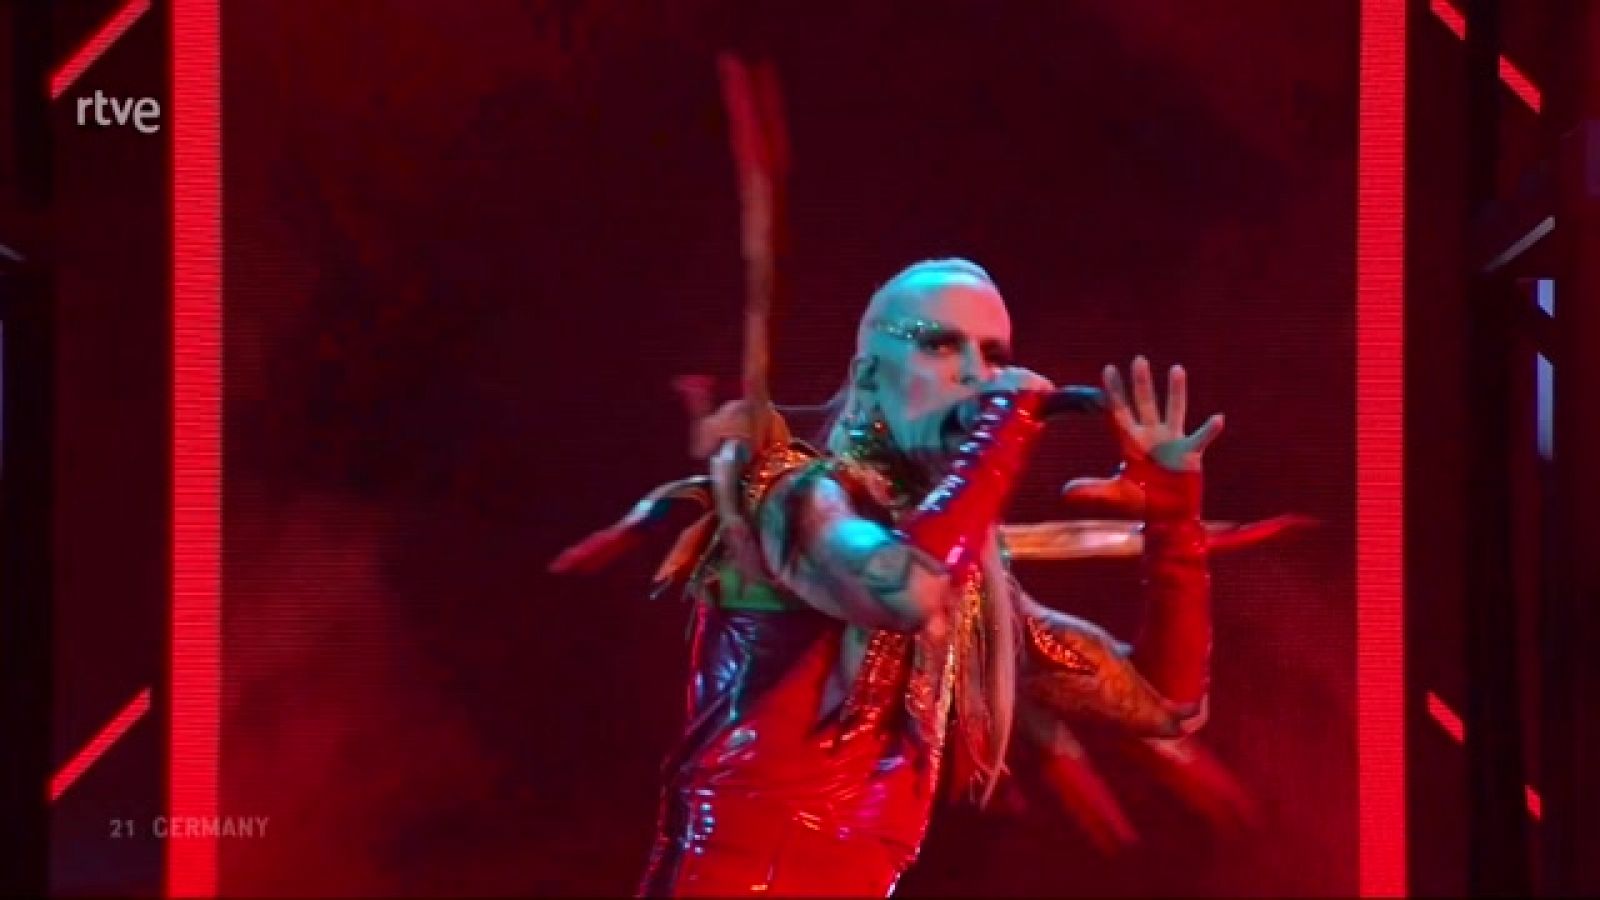 Eurovisión 2023 - Alemania: Lord of the Lost canta "Blood & Glitter" en la final